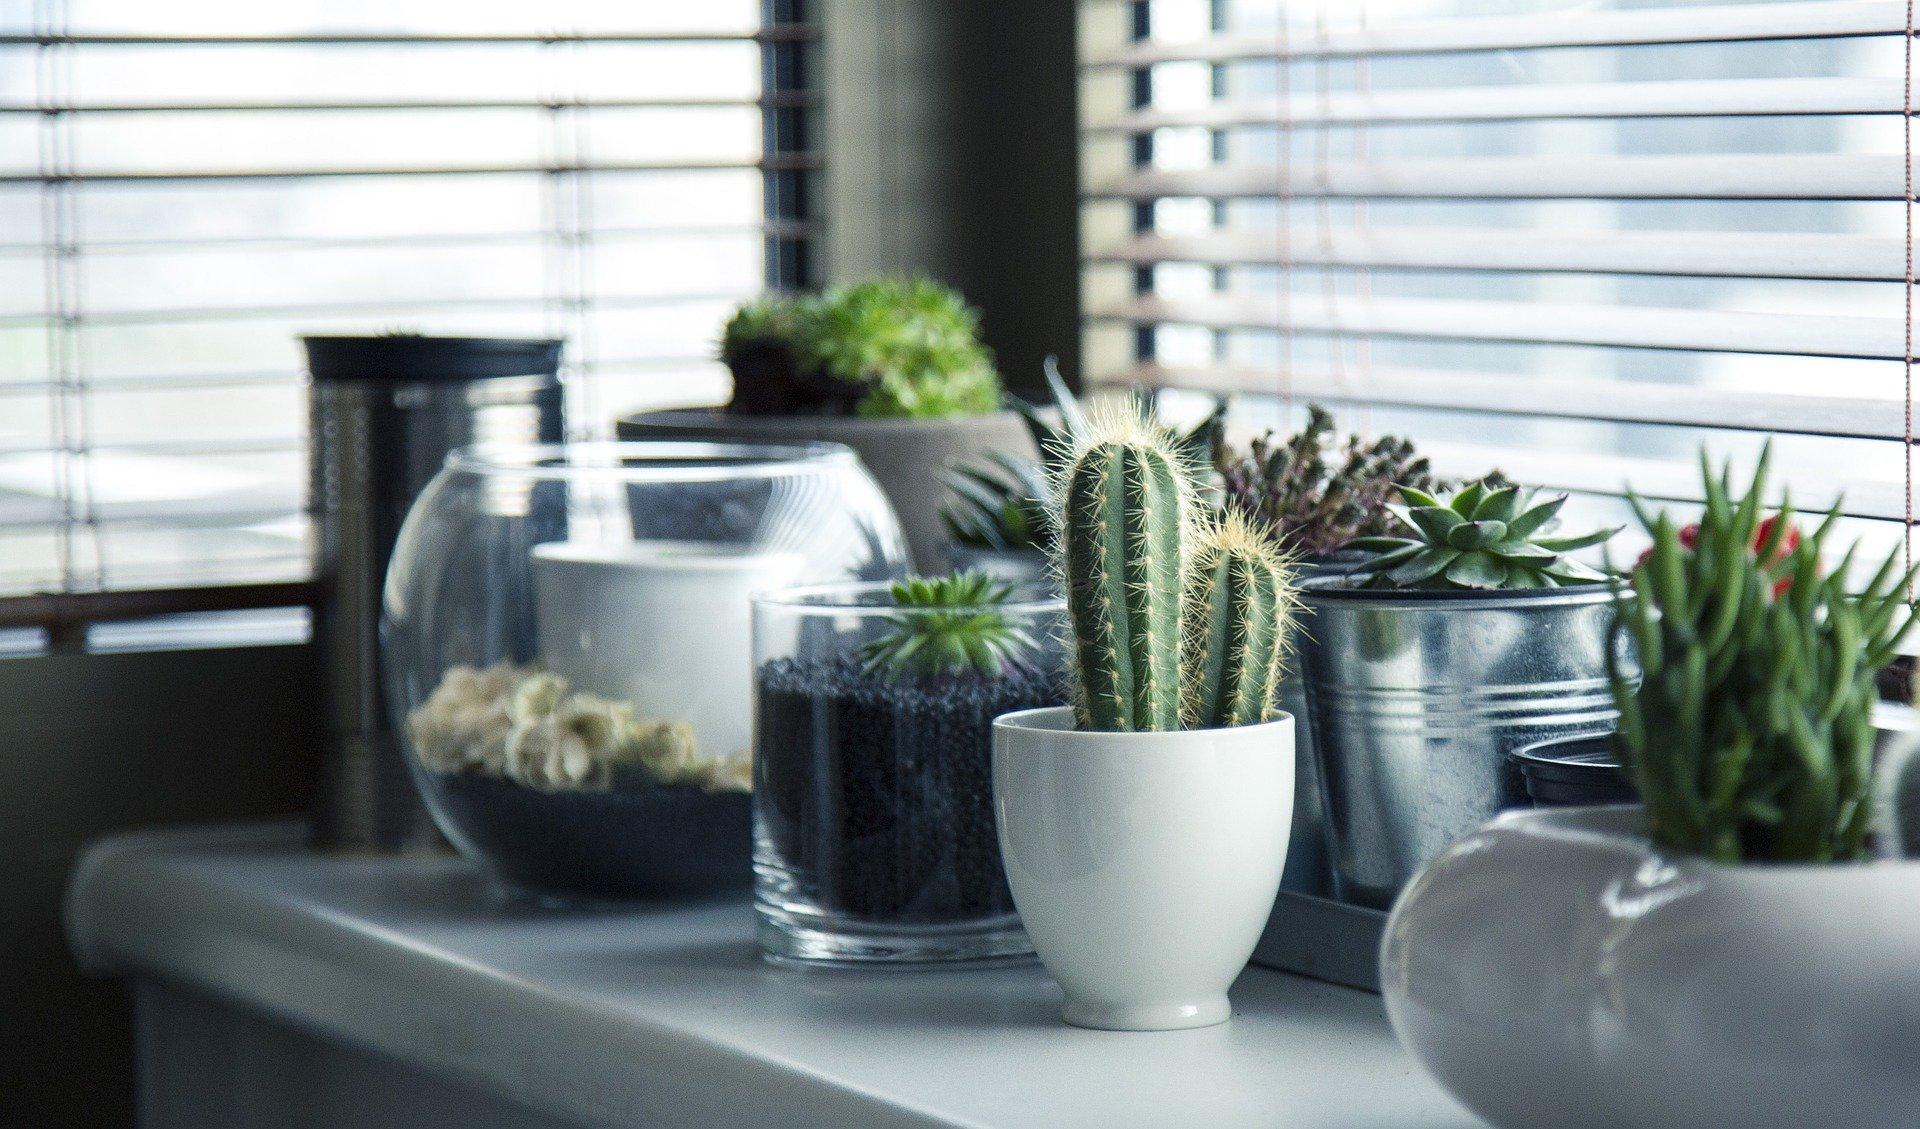 https://pixabay.com/photos/pots-plants-cactus-succulents-716579/